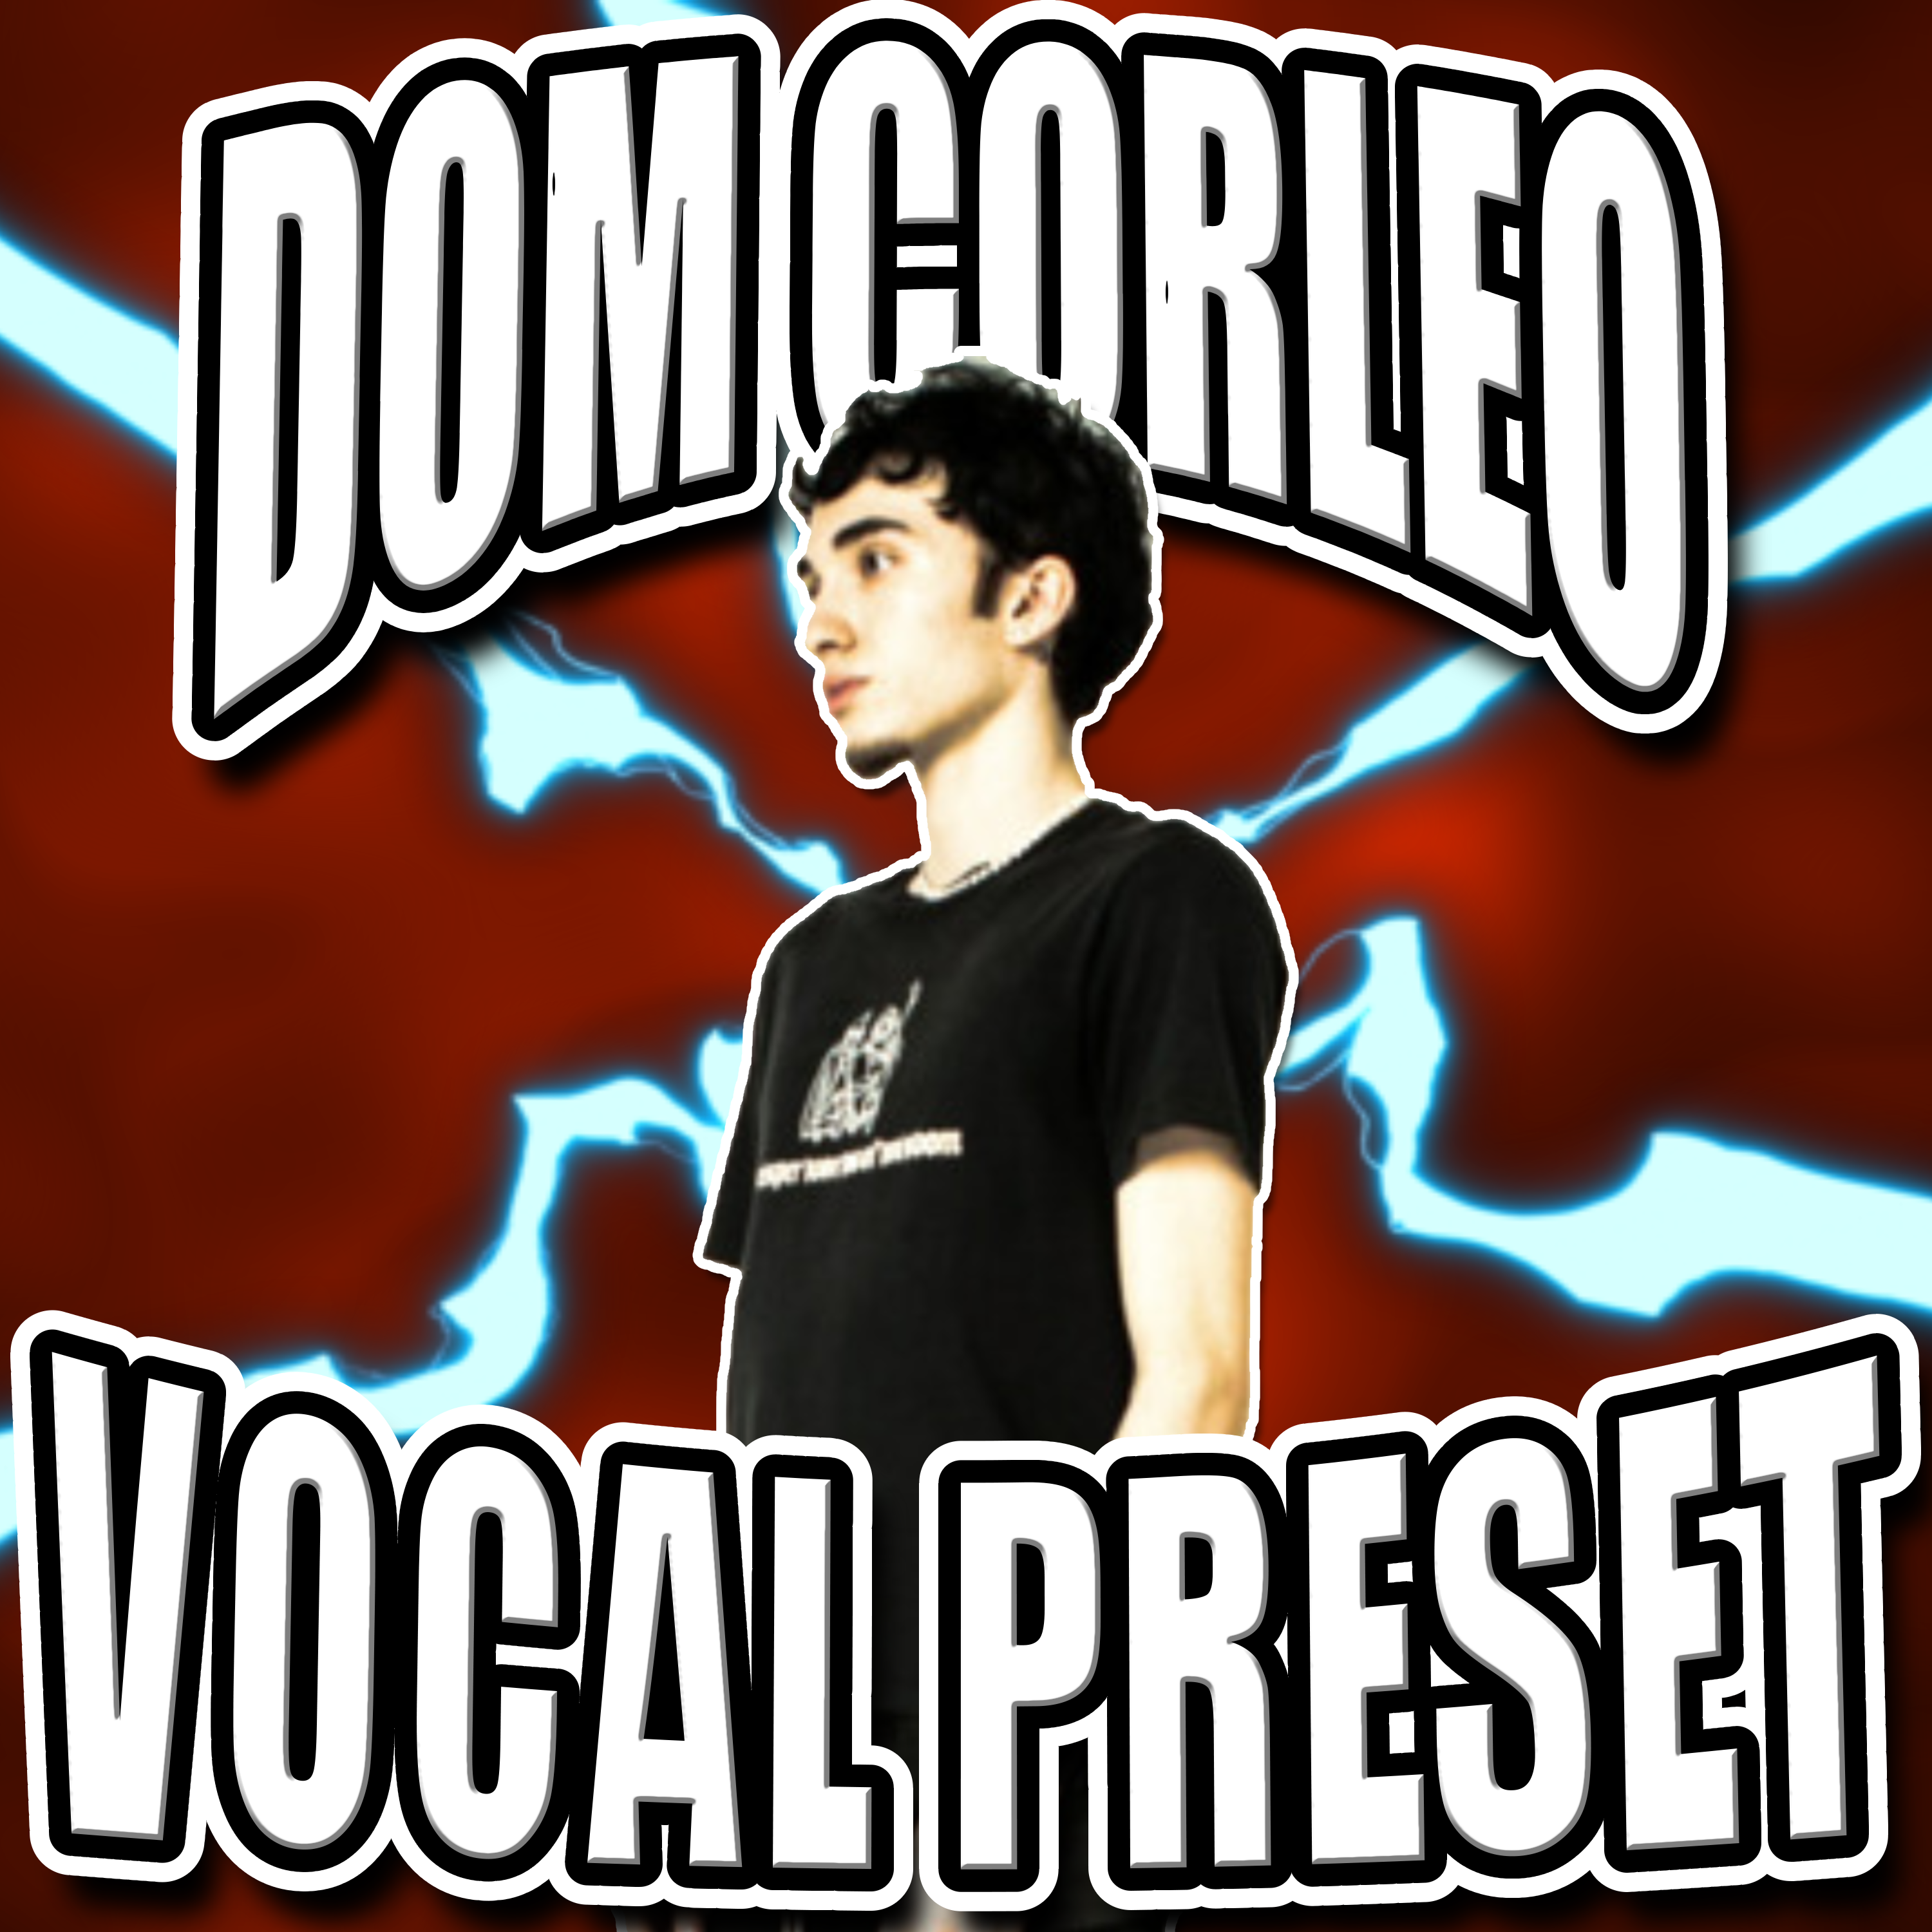 Dom Corleo Vocal Preset